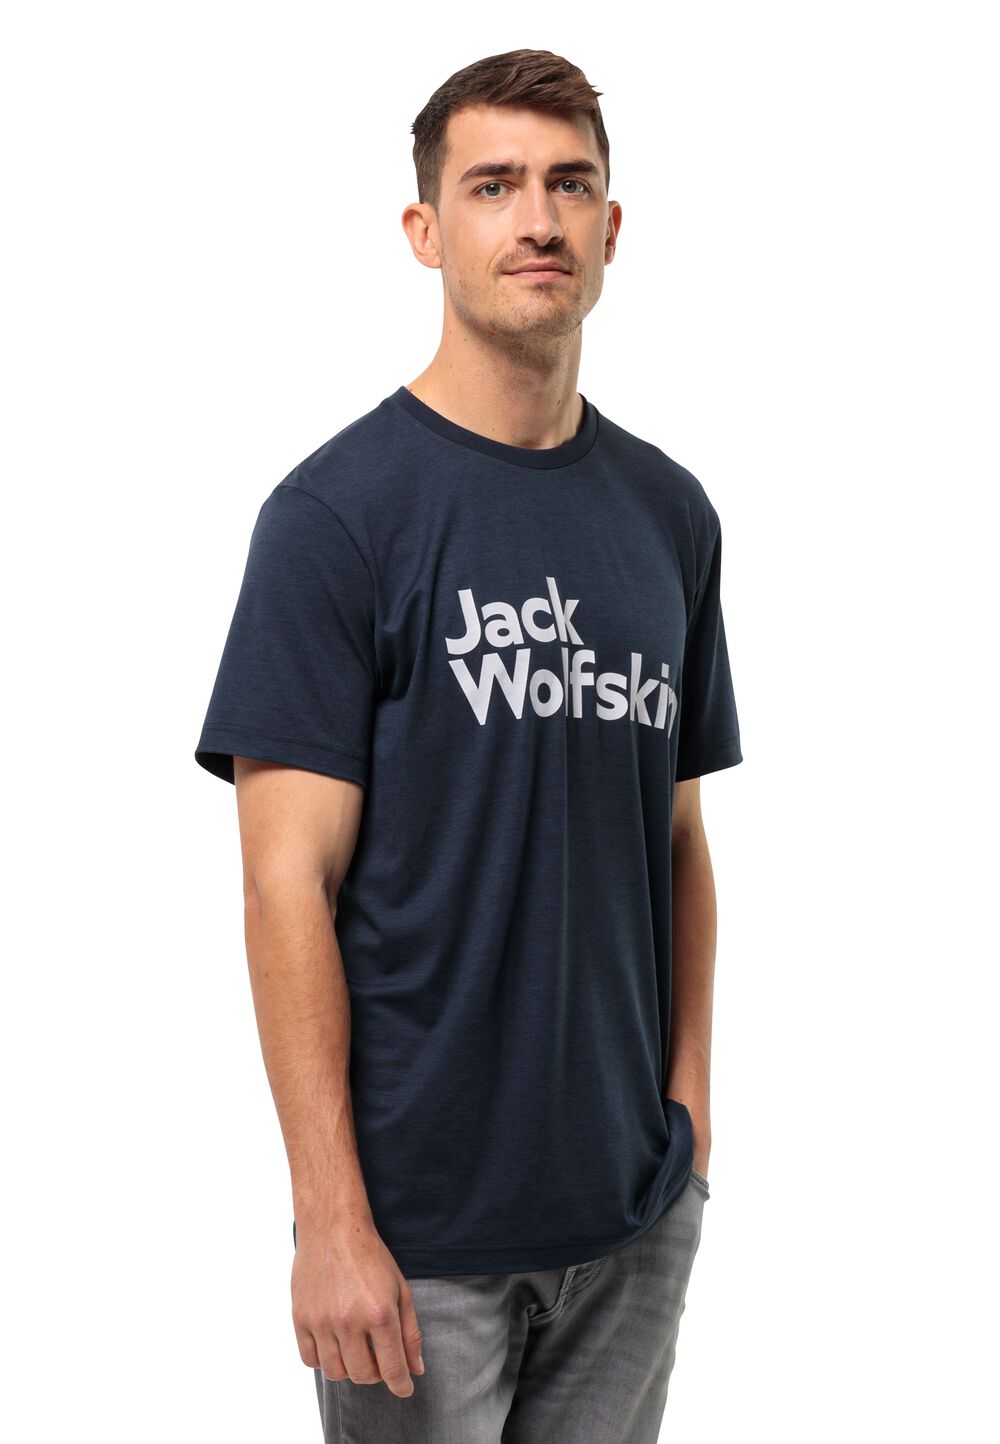 Jack Wolfskin Brand T-Shirt Men Functioneel shirt Heren M blue night blue